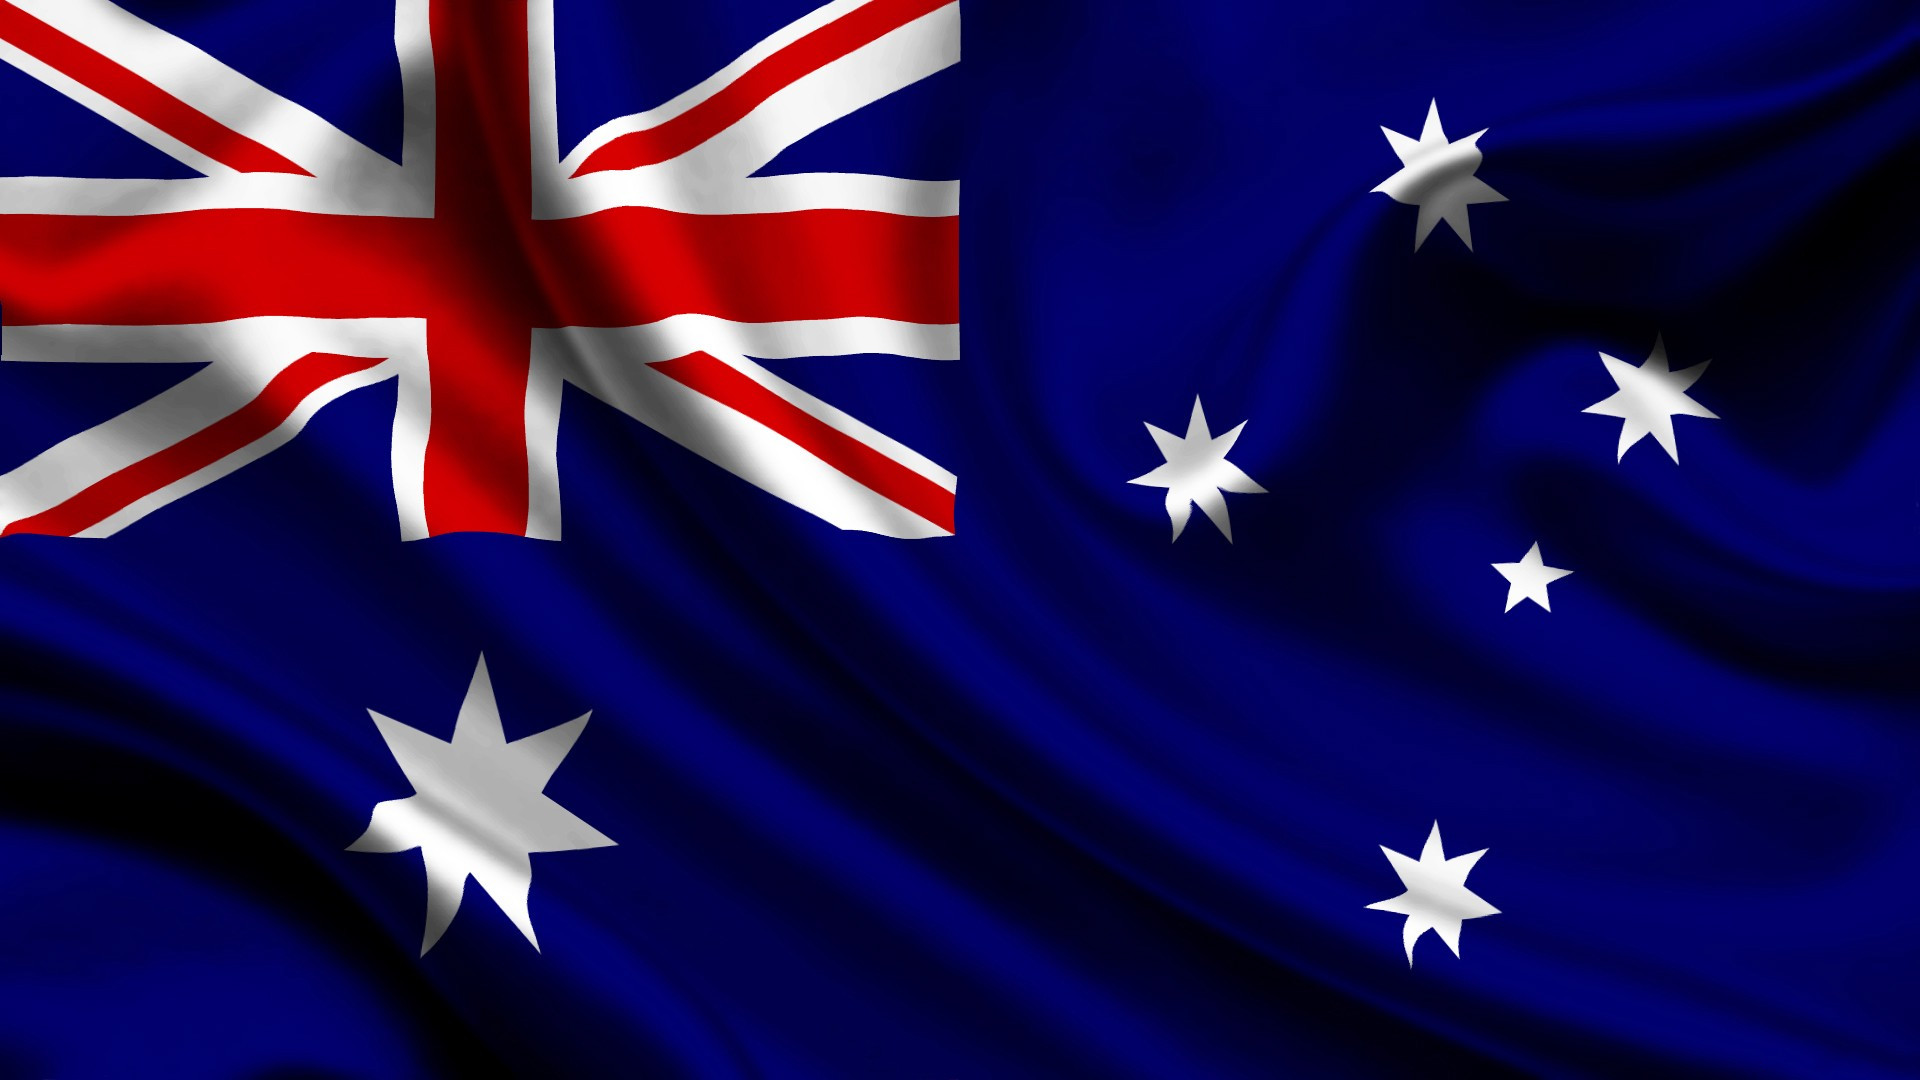 General 1920x1080 flag Australia blue red British flag digital art